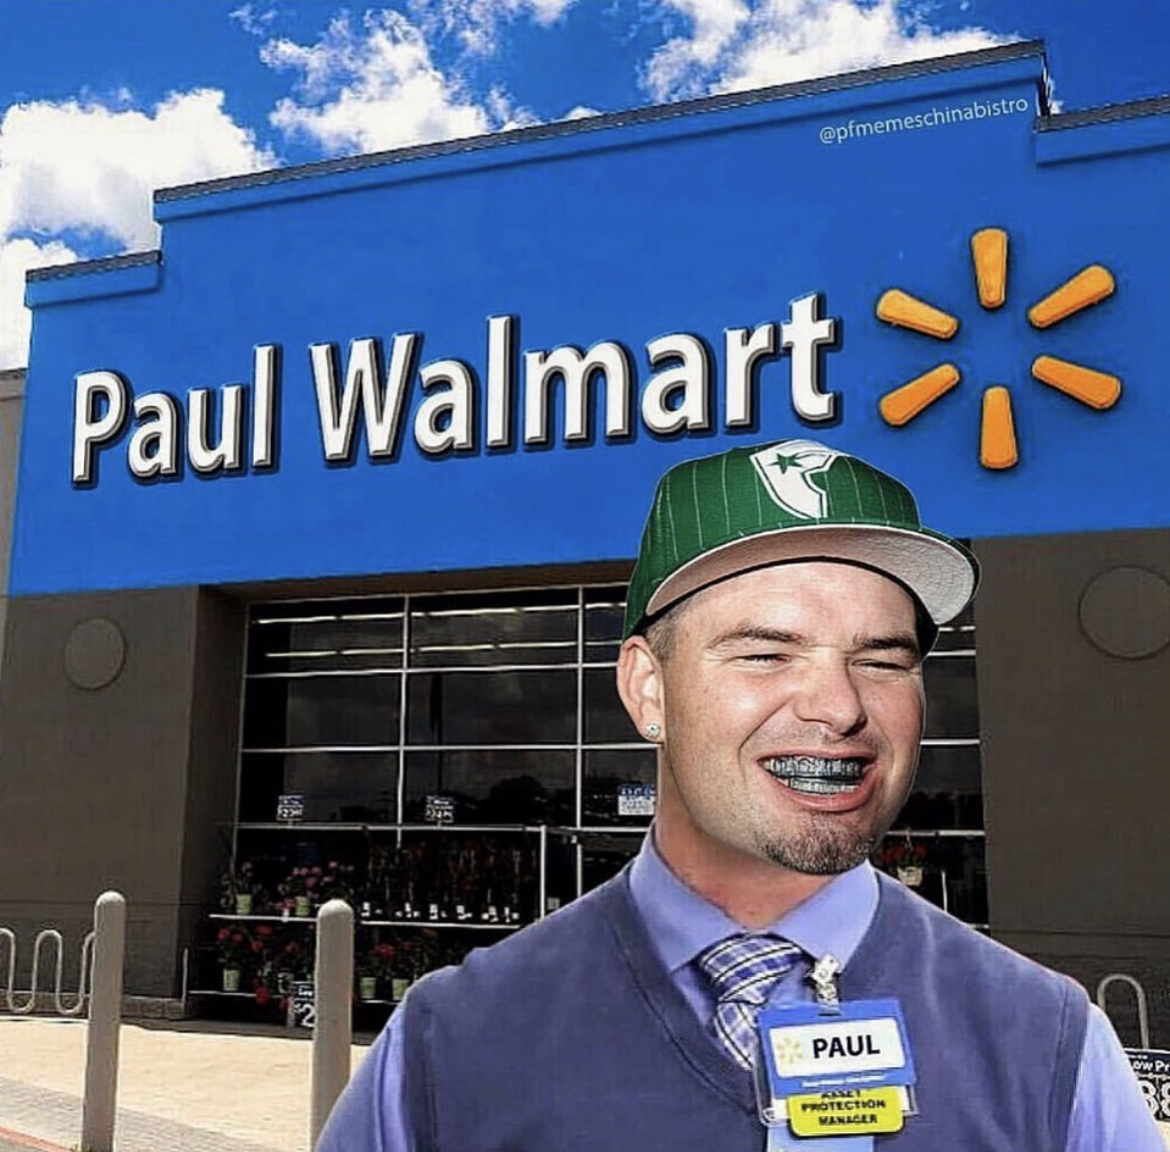 PFMemesChinaBistro Memes - walmart new bedford - Paul Walmart W Paul Protection Manager